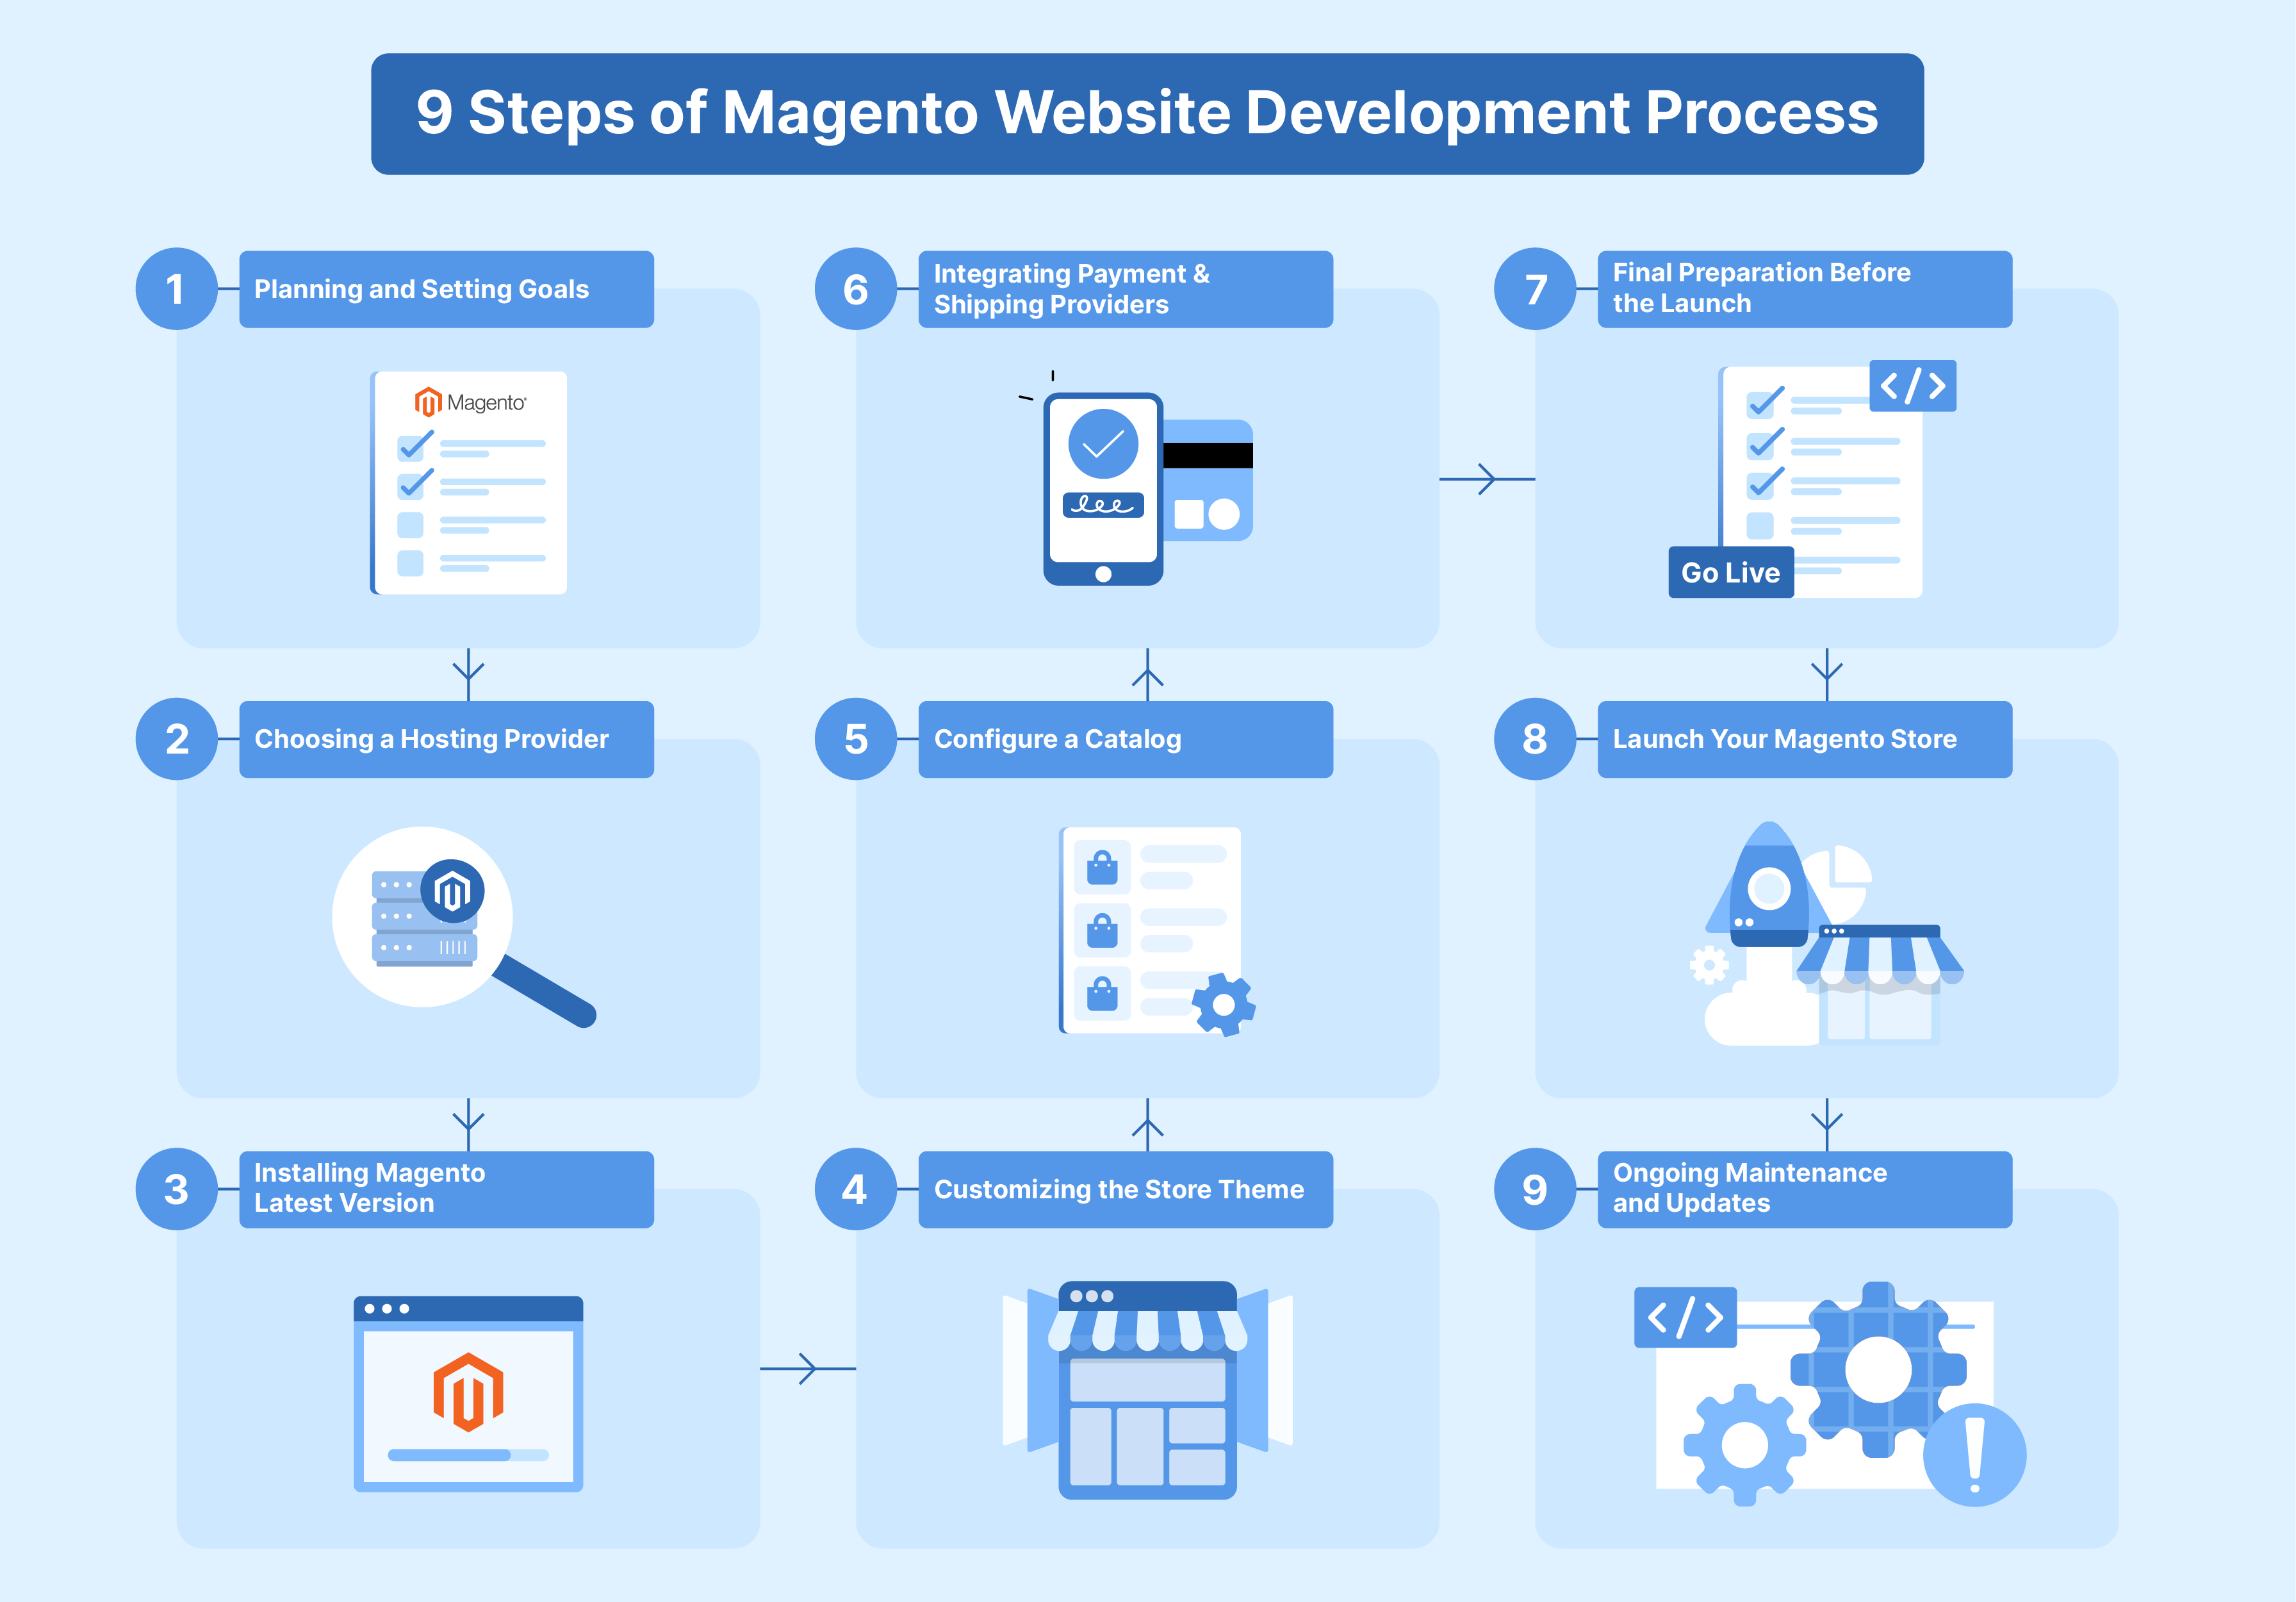 Nine key steps in the Magento website development process